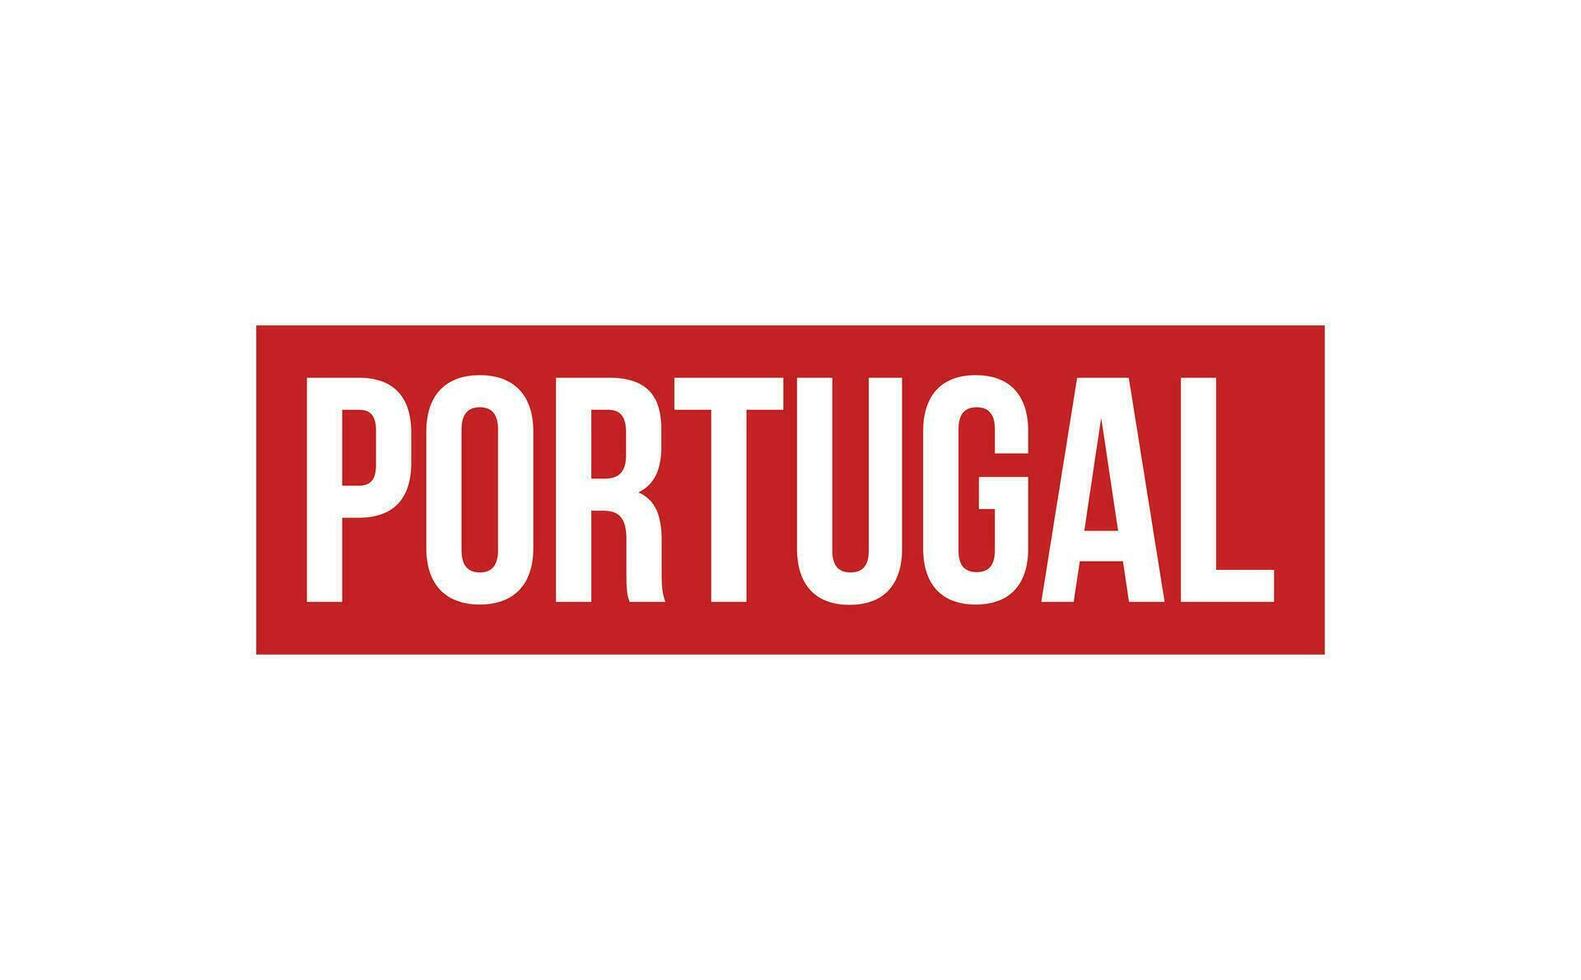 Portugal borracha carimbo foca vetor